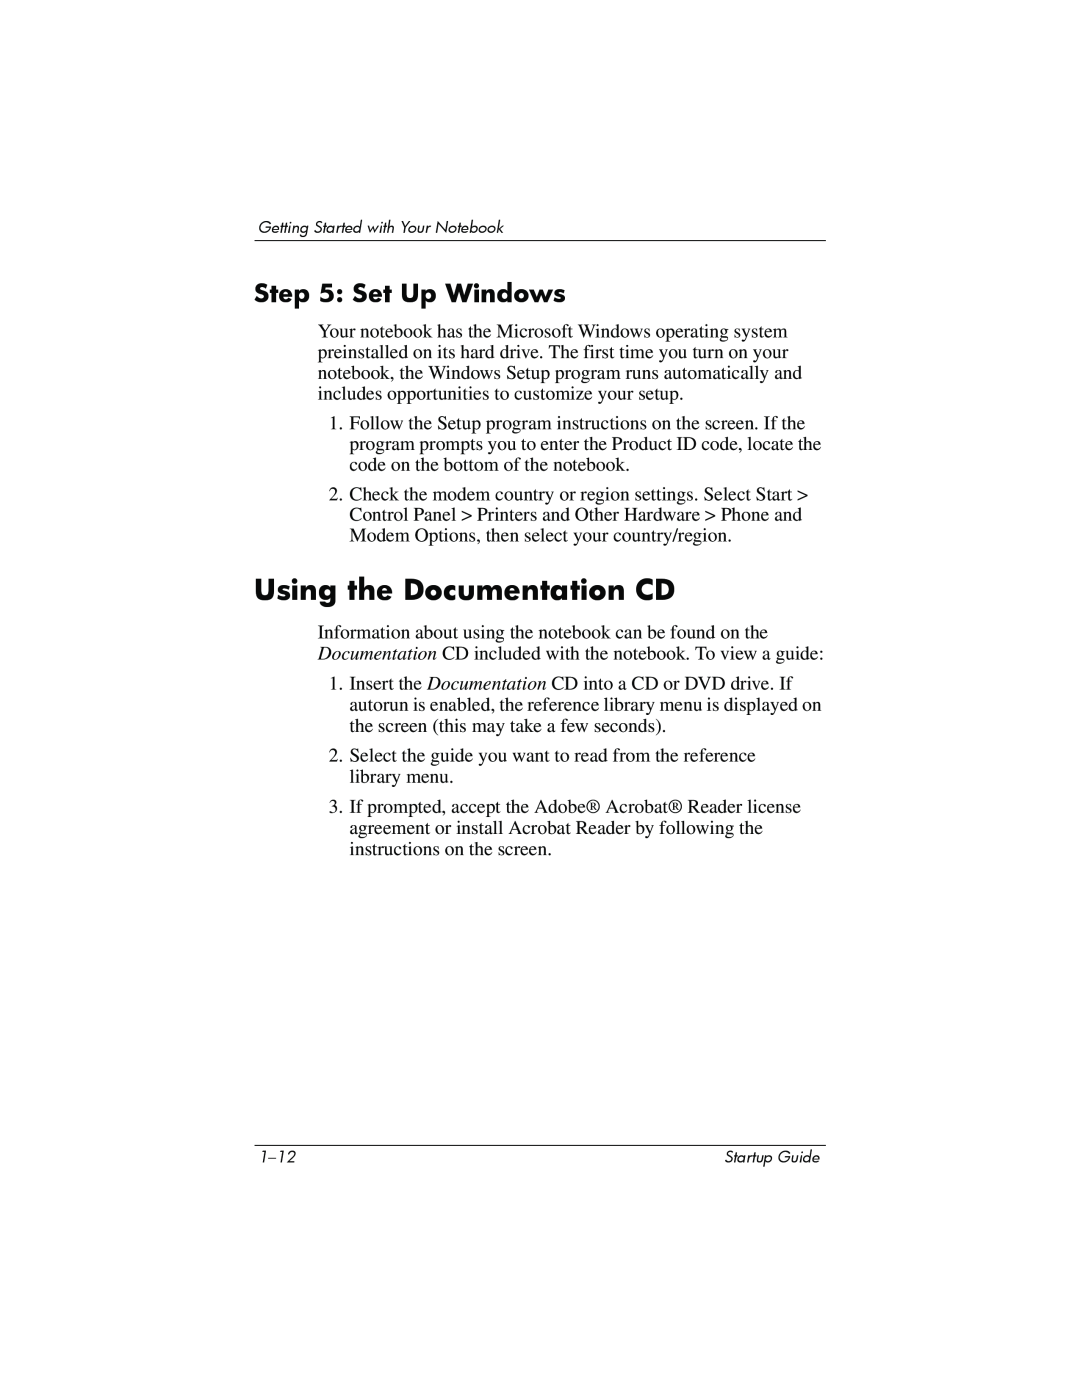 Compaq Personal Computer manual Using the Documentation CD, Set Up Windows 